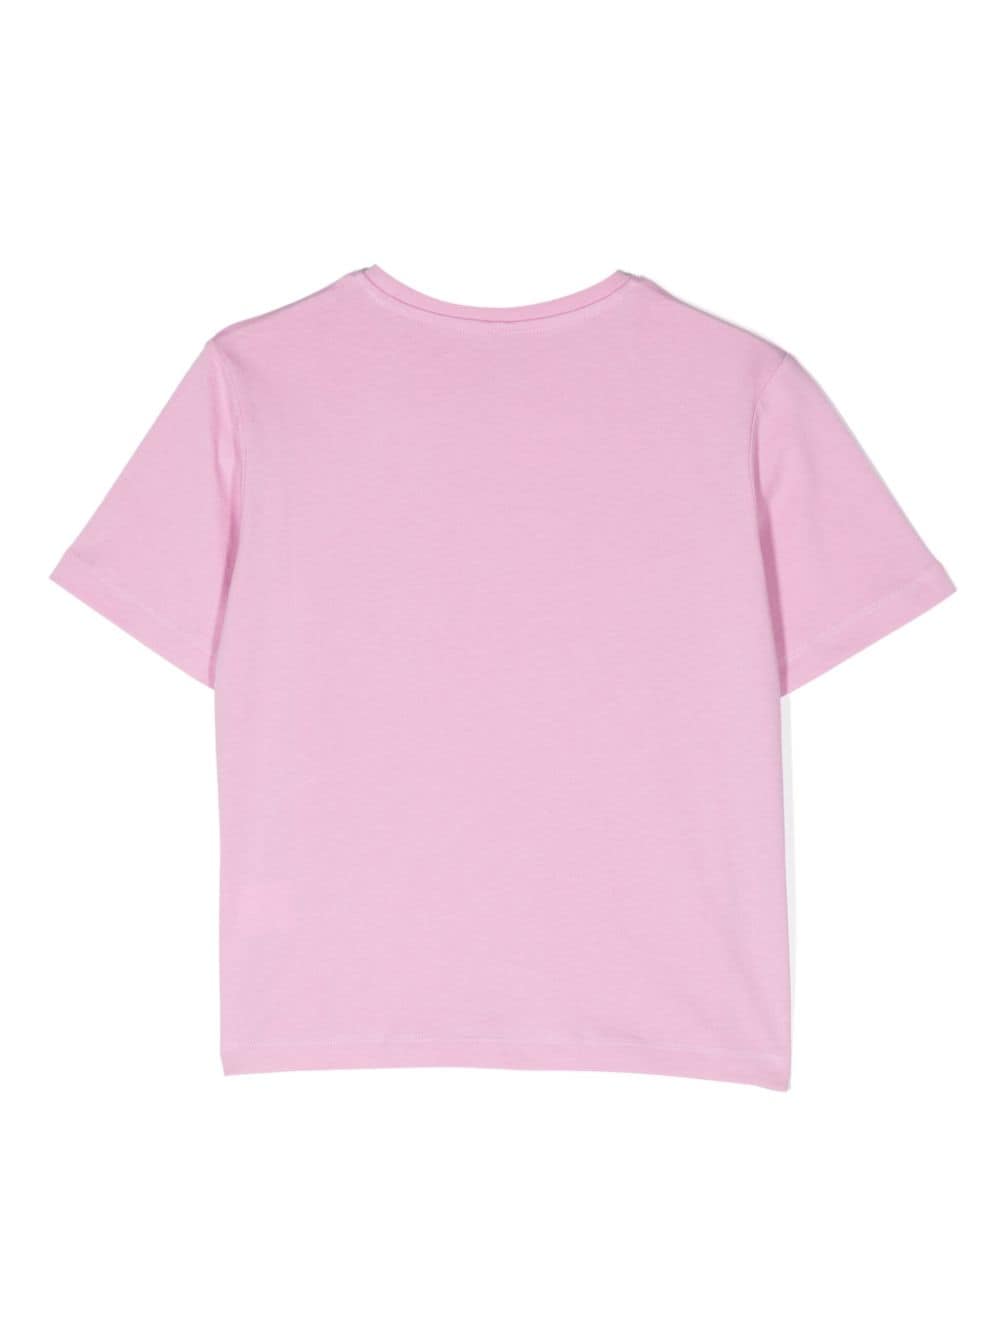 t-shirt rosa bambina